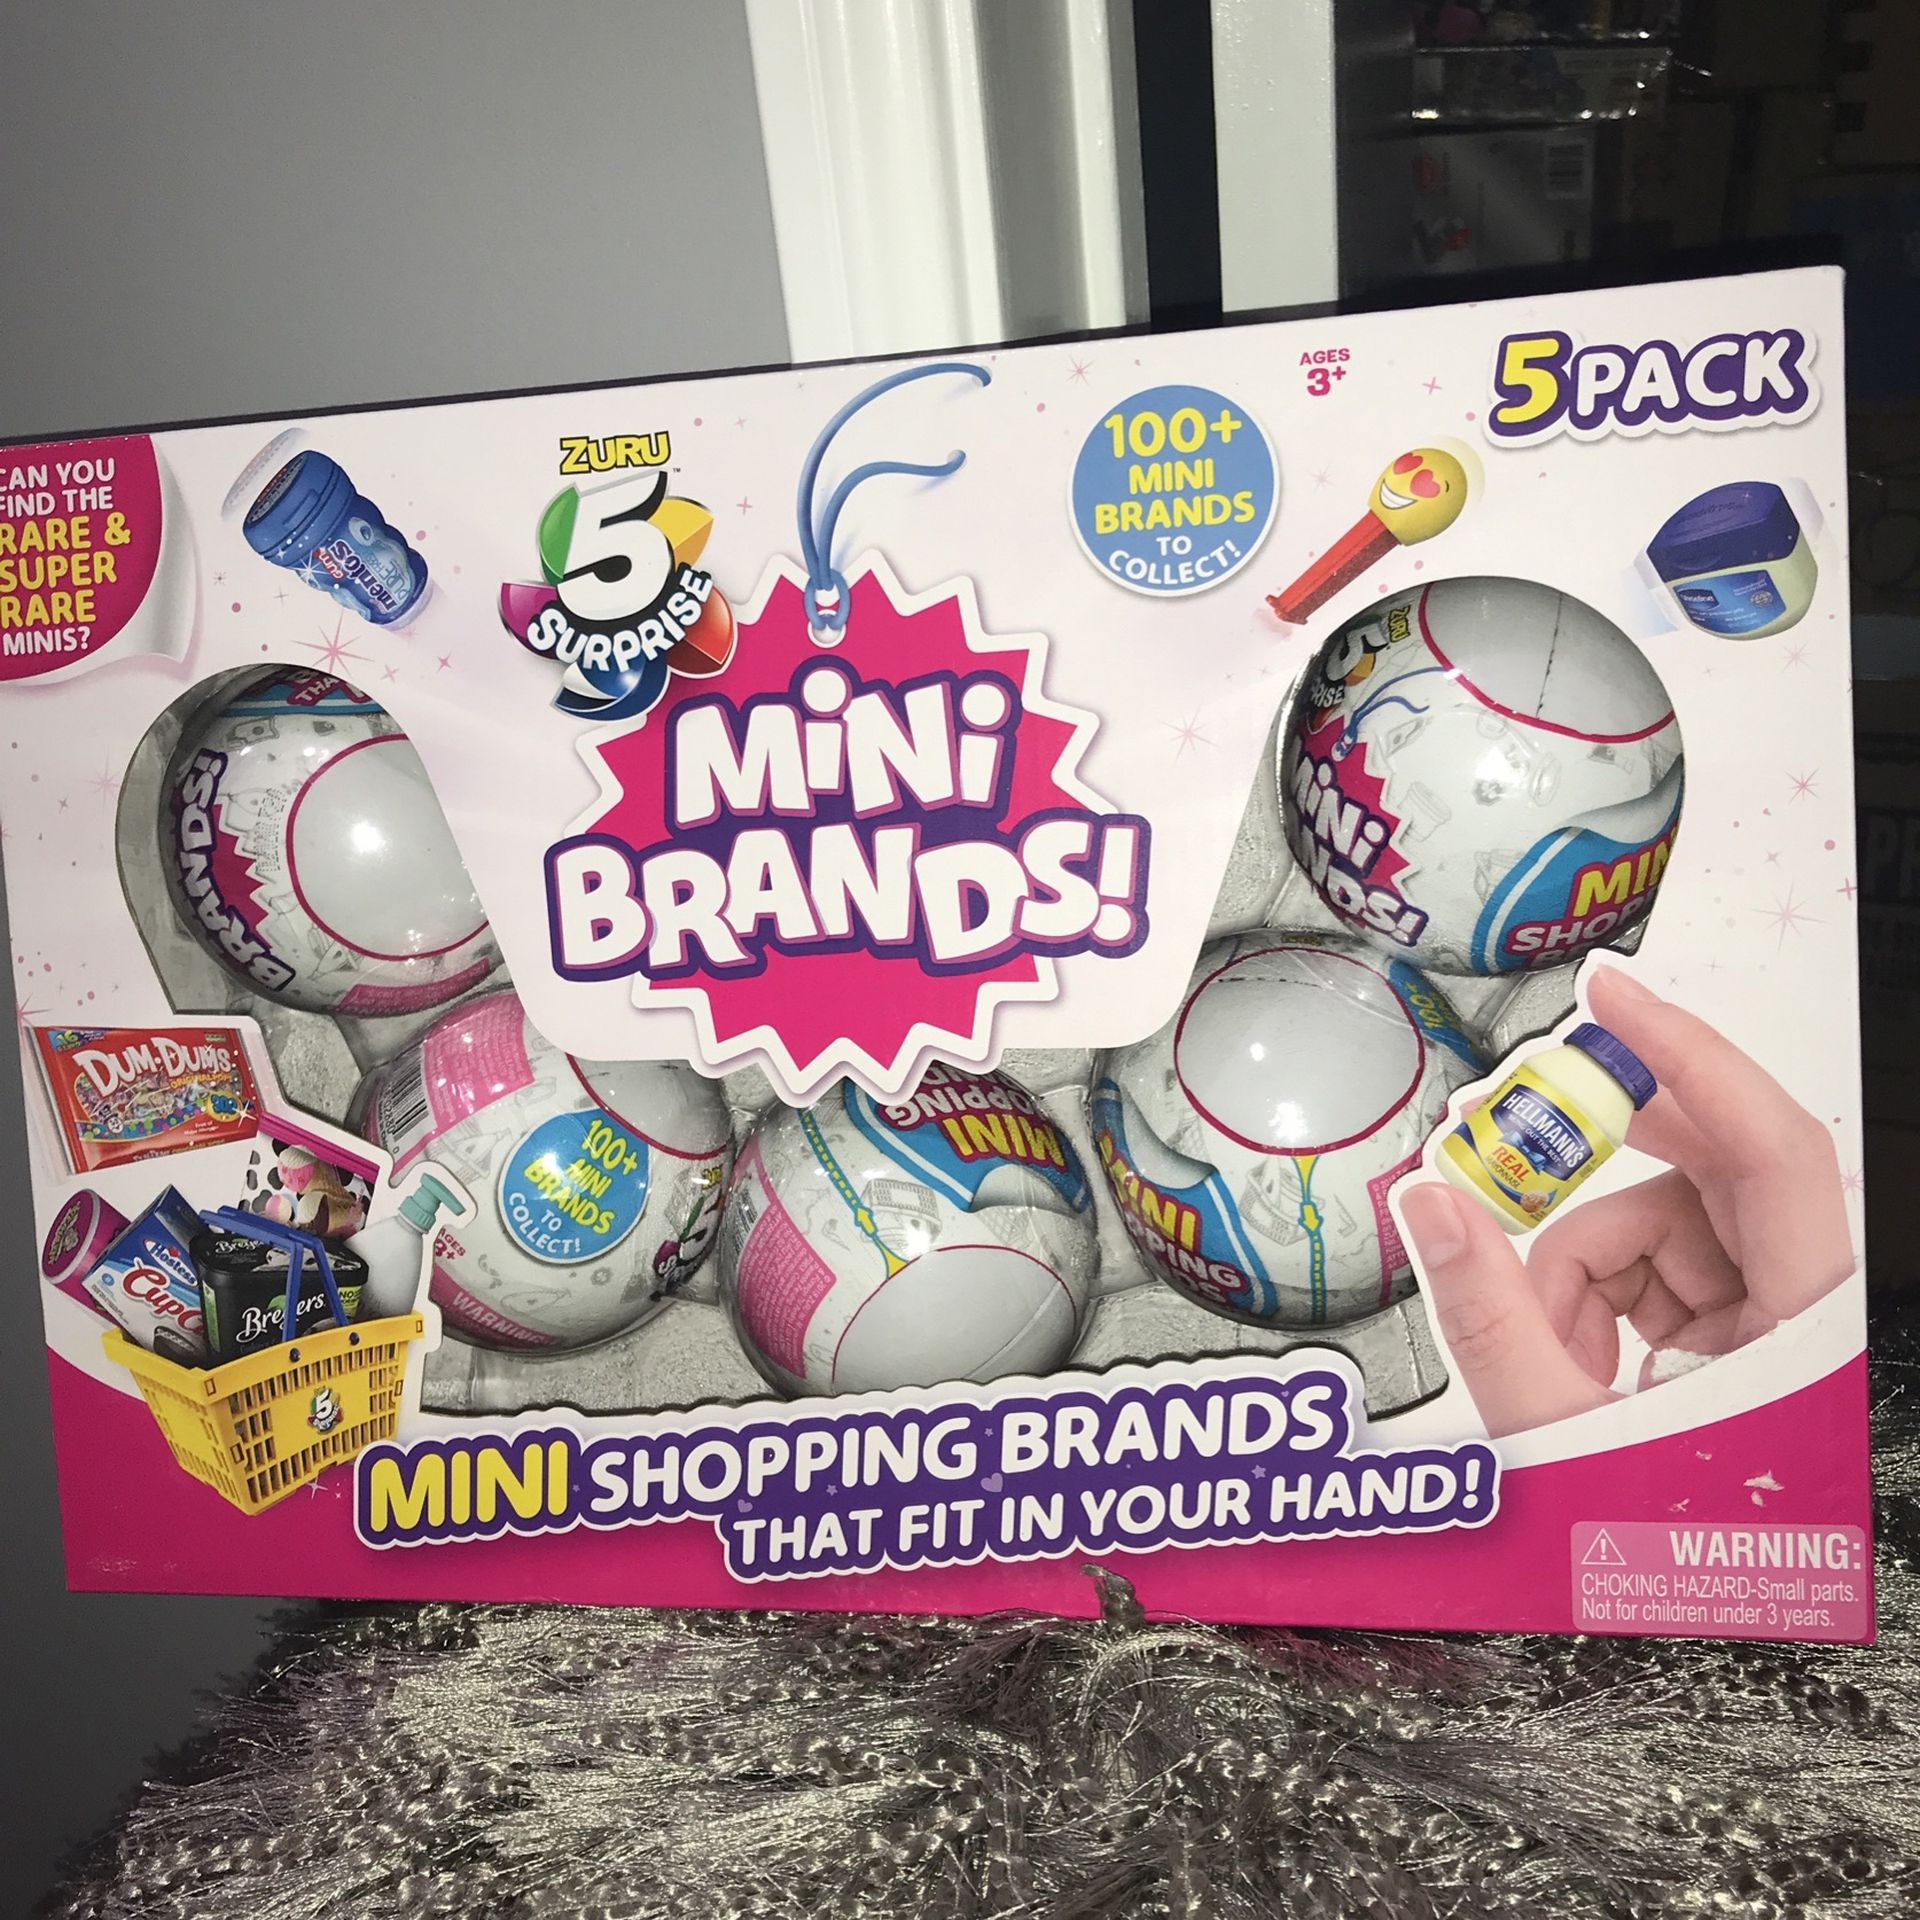 Zuru 5 Surprise Mini Brands Series 1 Balls Sealed 5pk with 100+ Mini Brands to Collect